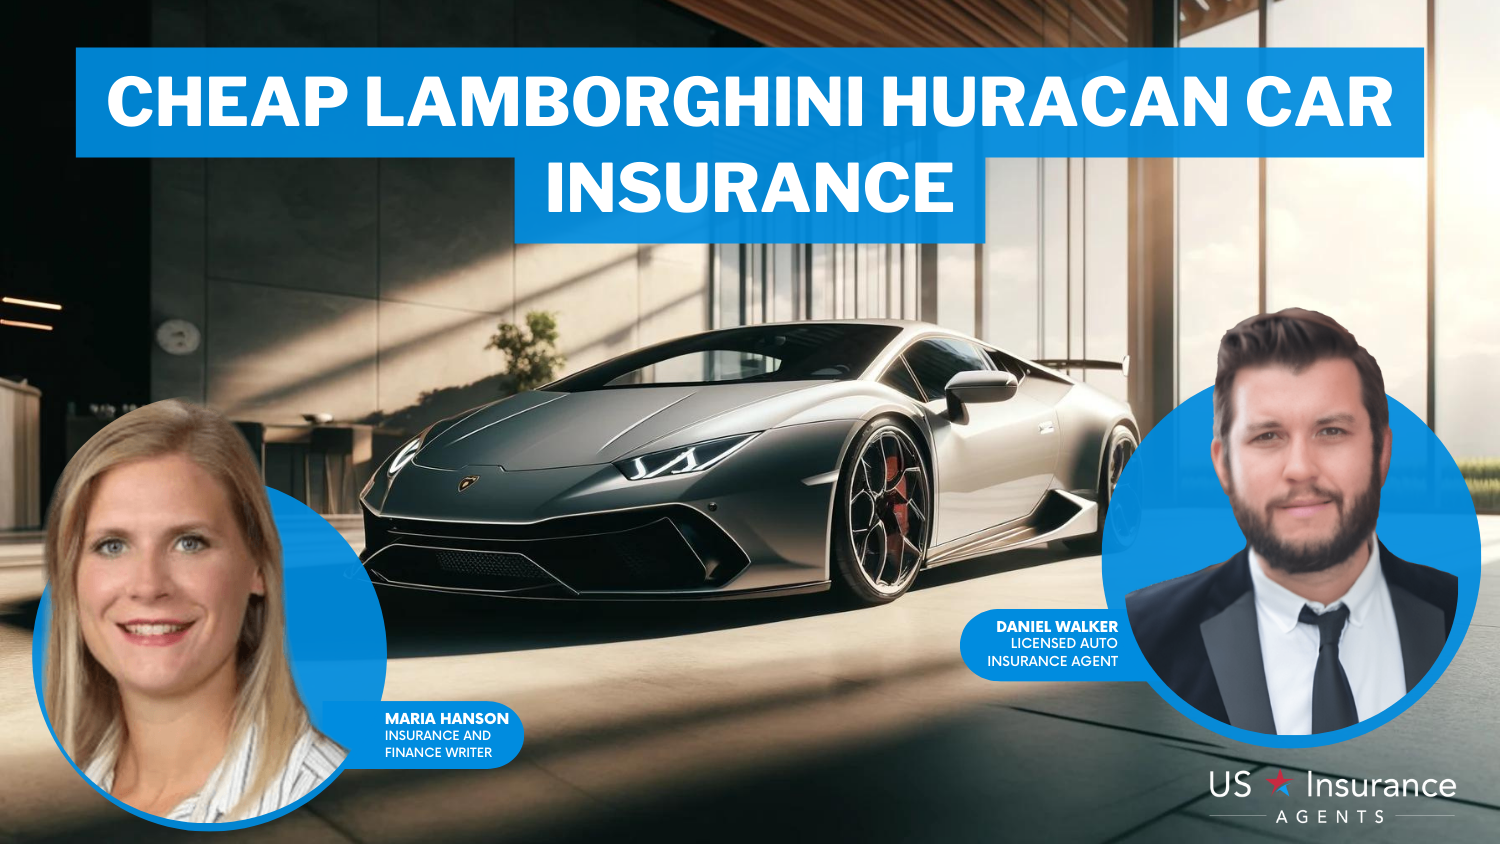 State Farm, Nationwide, AAA: Cheap Lamborghini Huracan Car Insurance